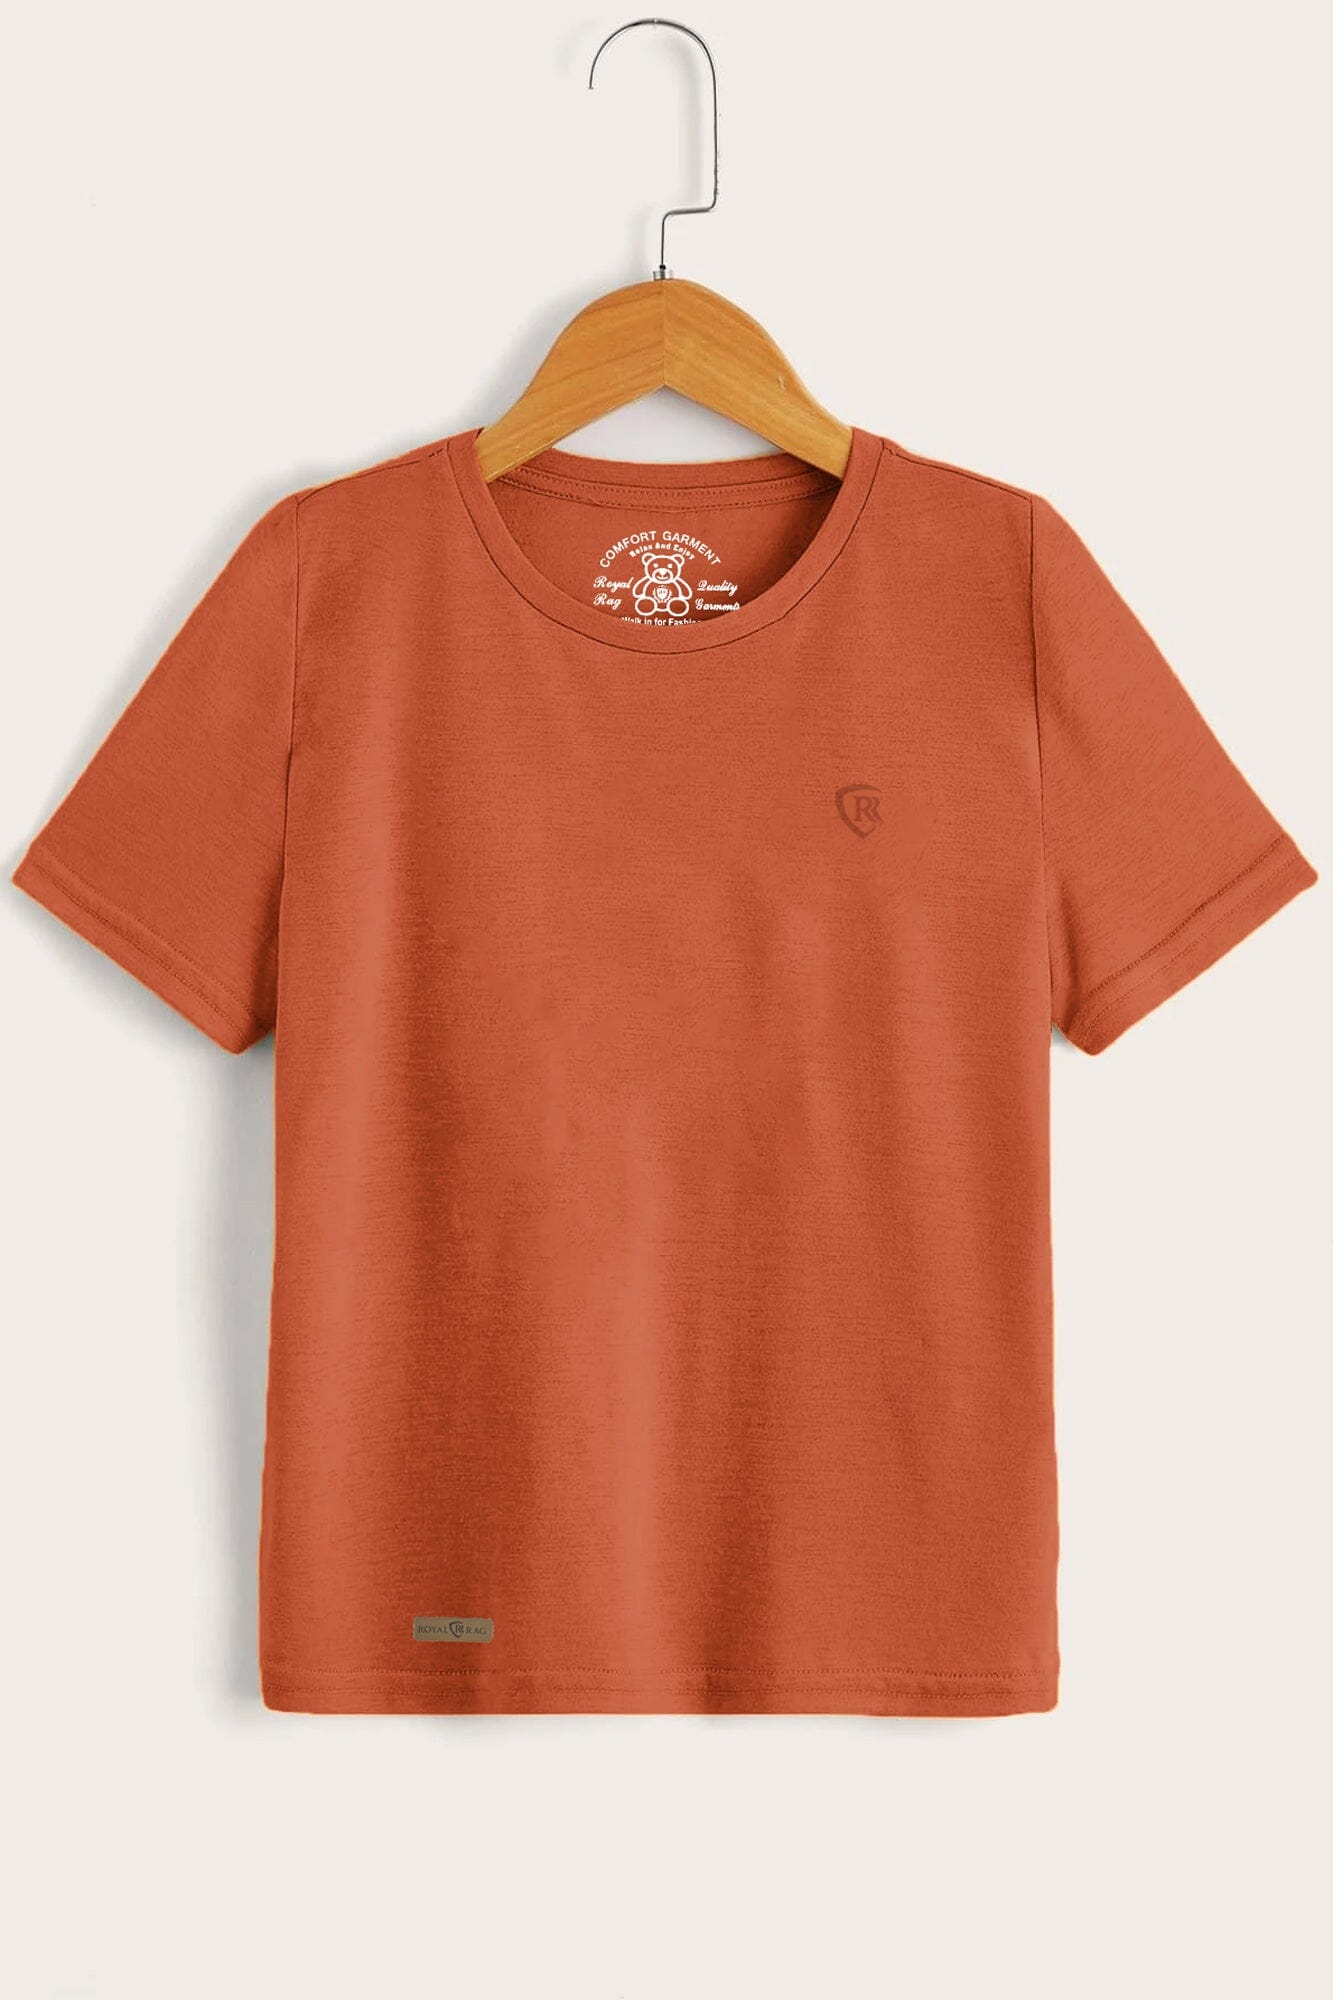 RR Kid's Logo Printed Short Sleeve Tee Shirt Boy's Tee Shirt Usman Traders Brick 2-3 Years 